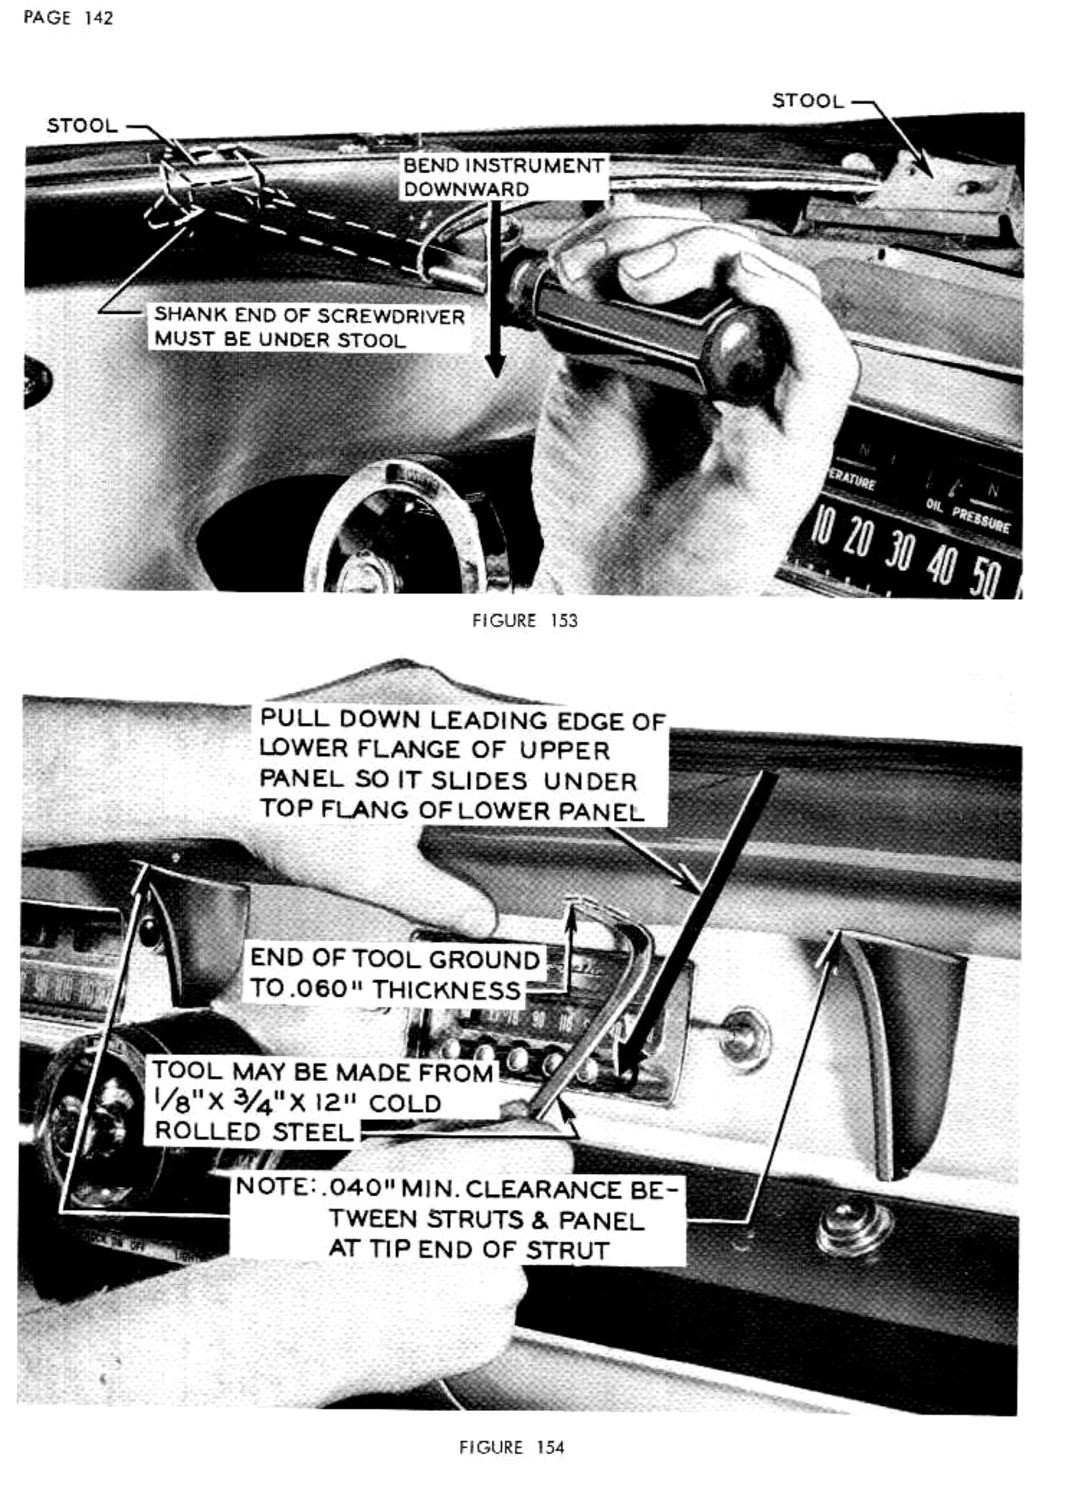 n_1957 Buick Product Service  Bulletins-143-143.jpg